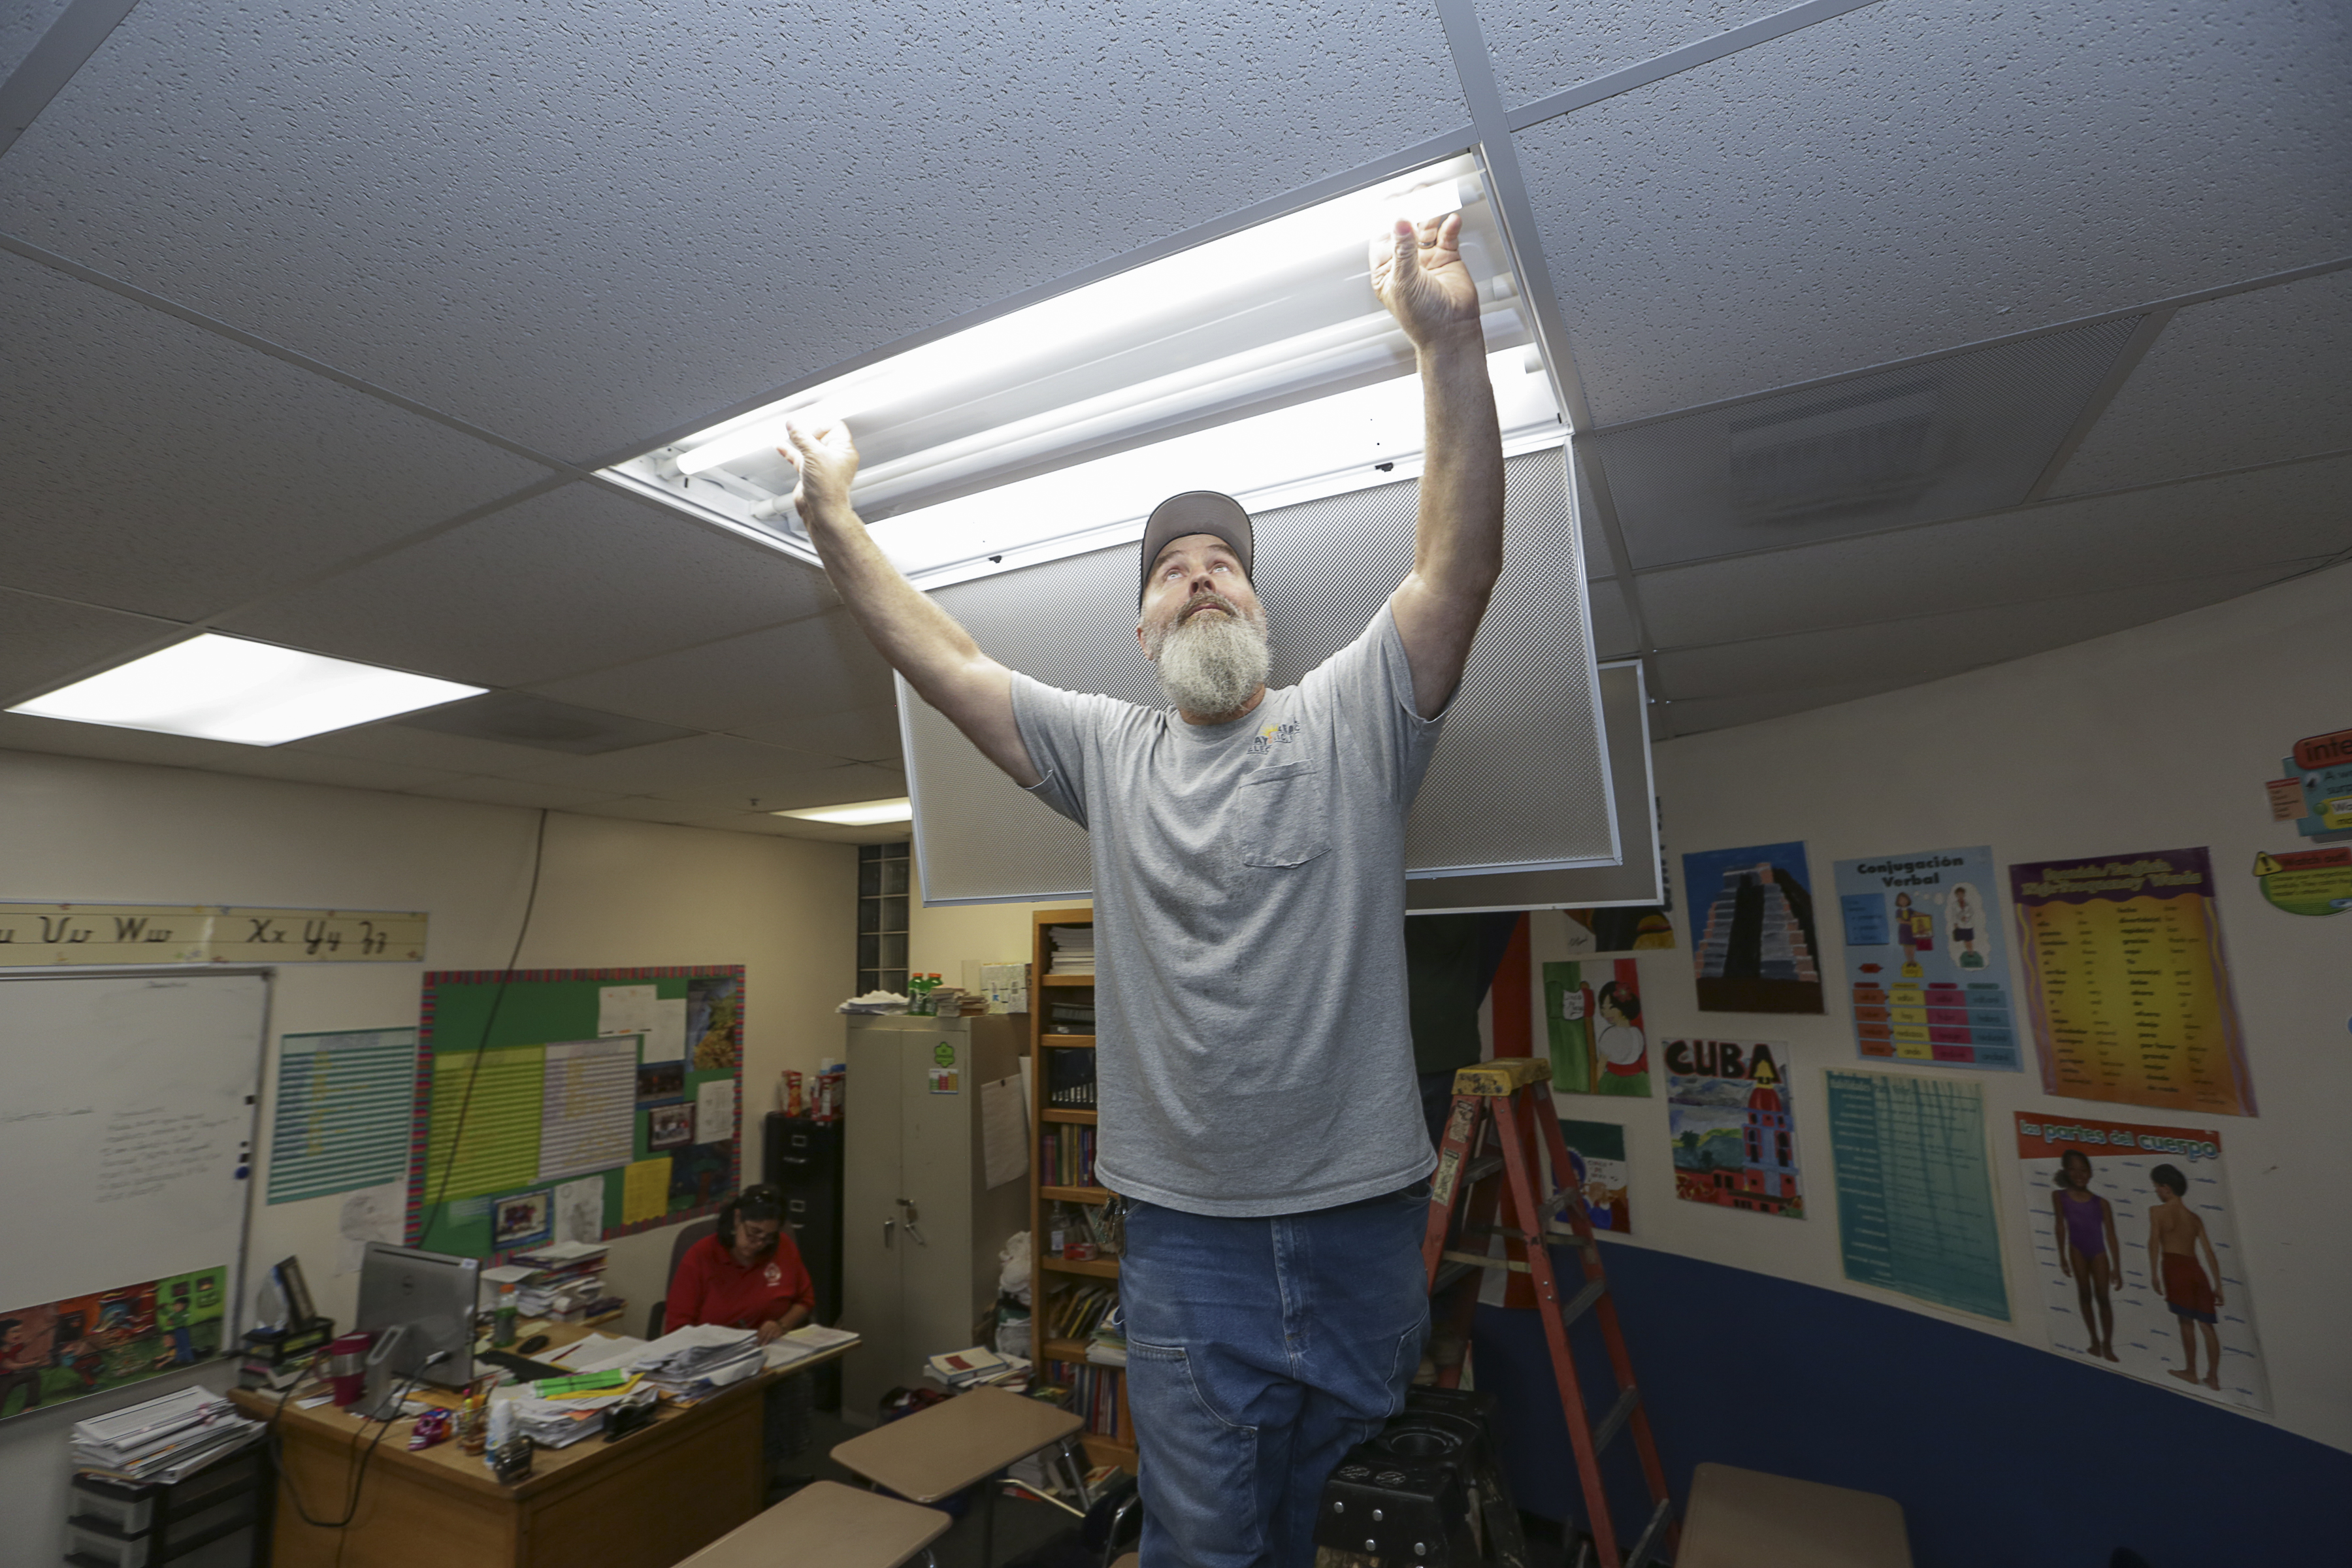 Installing lights in school